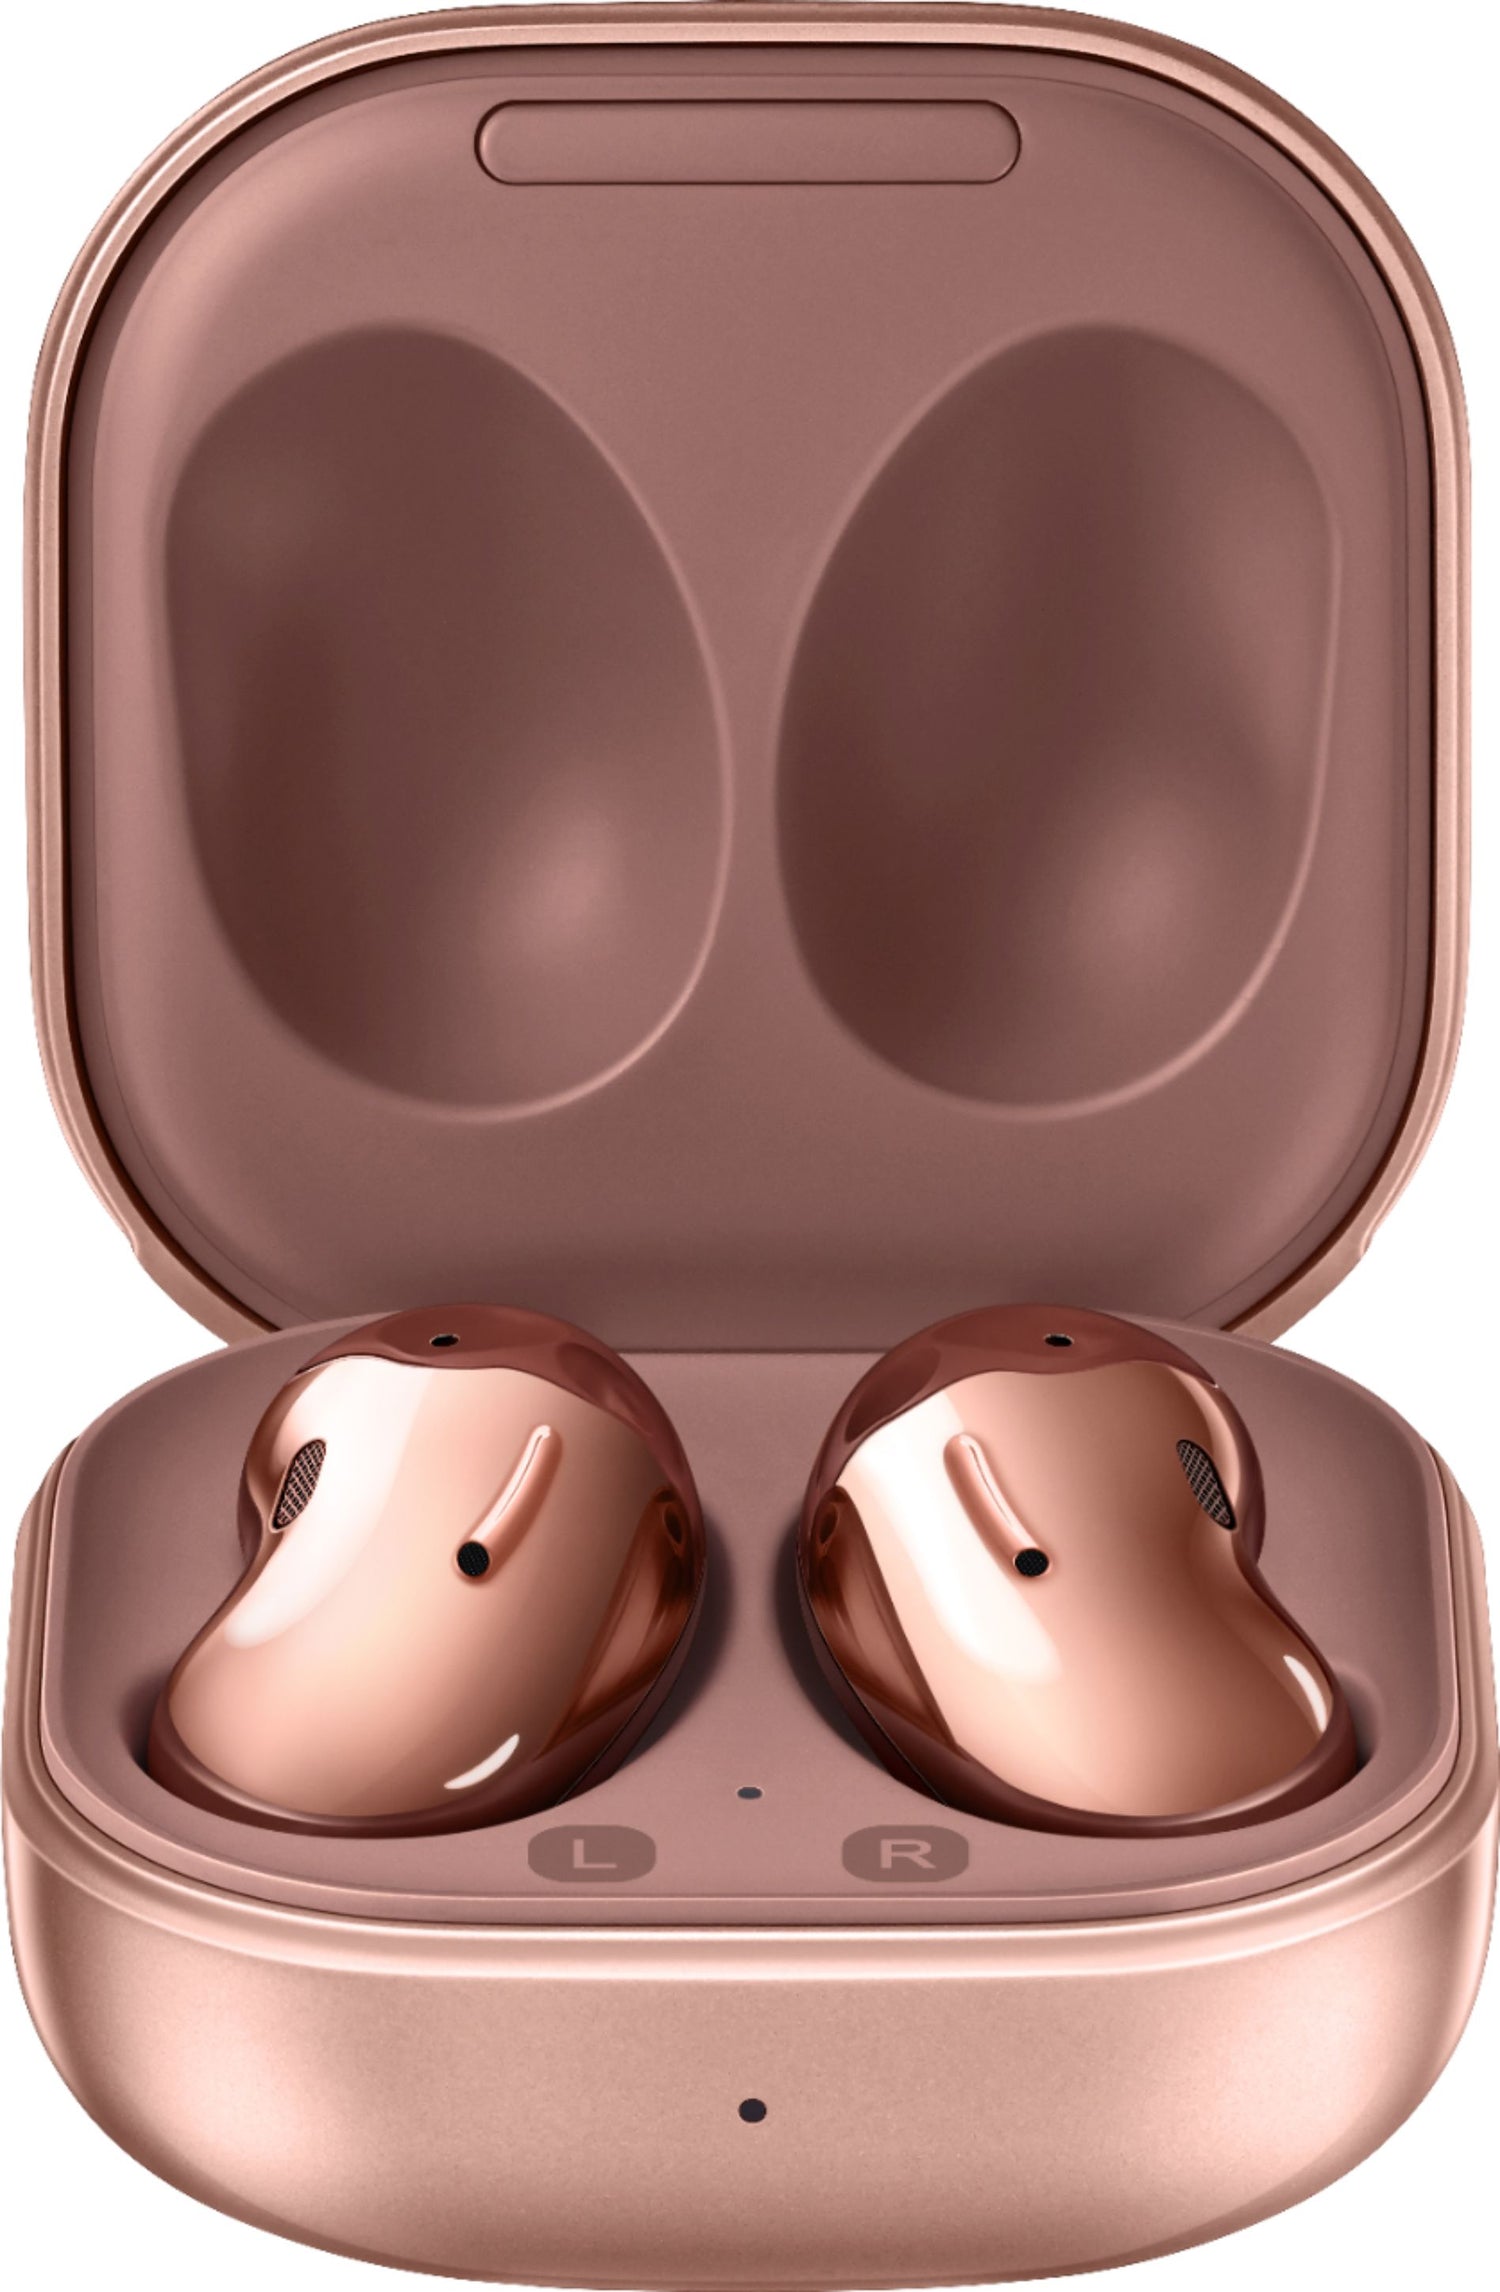 Samsung Galaxy Buds Live True Wireless Earbud Headphones - Mystic Bronze (Certified Refurbished)